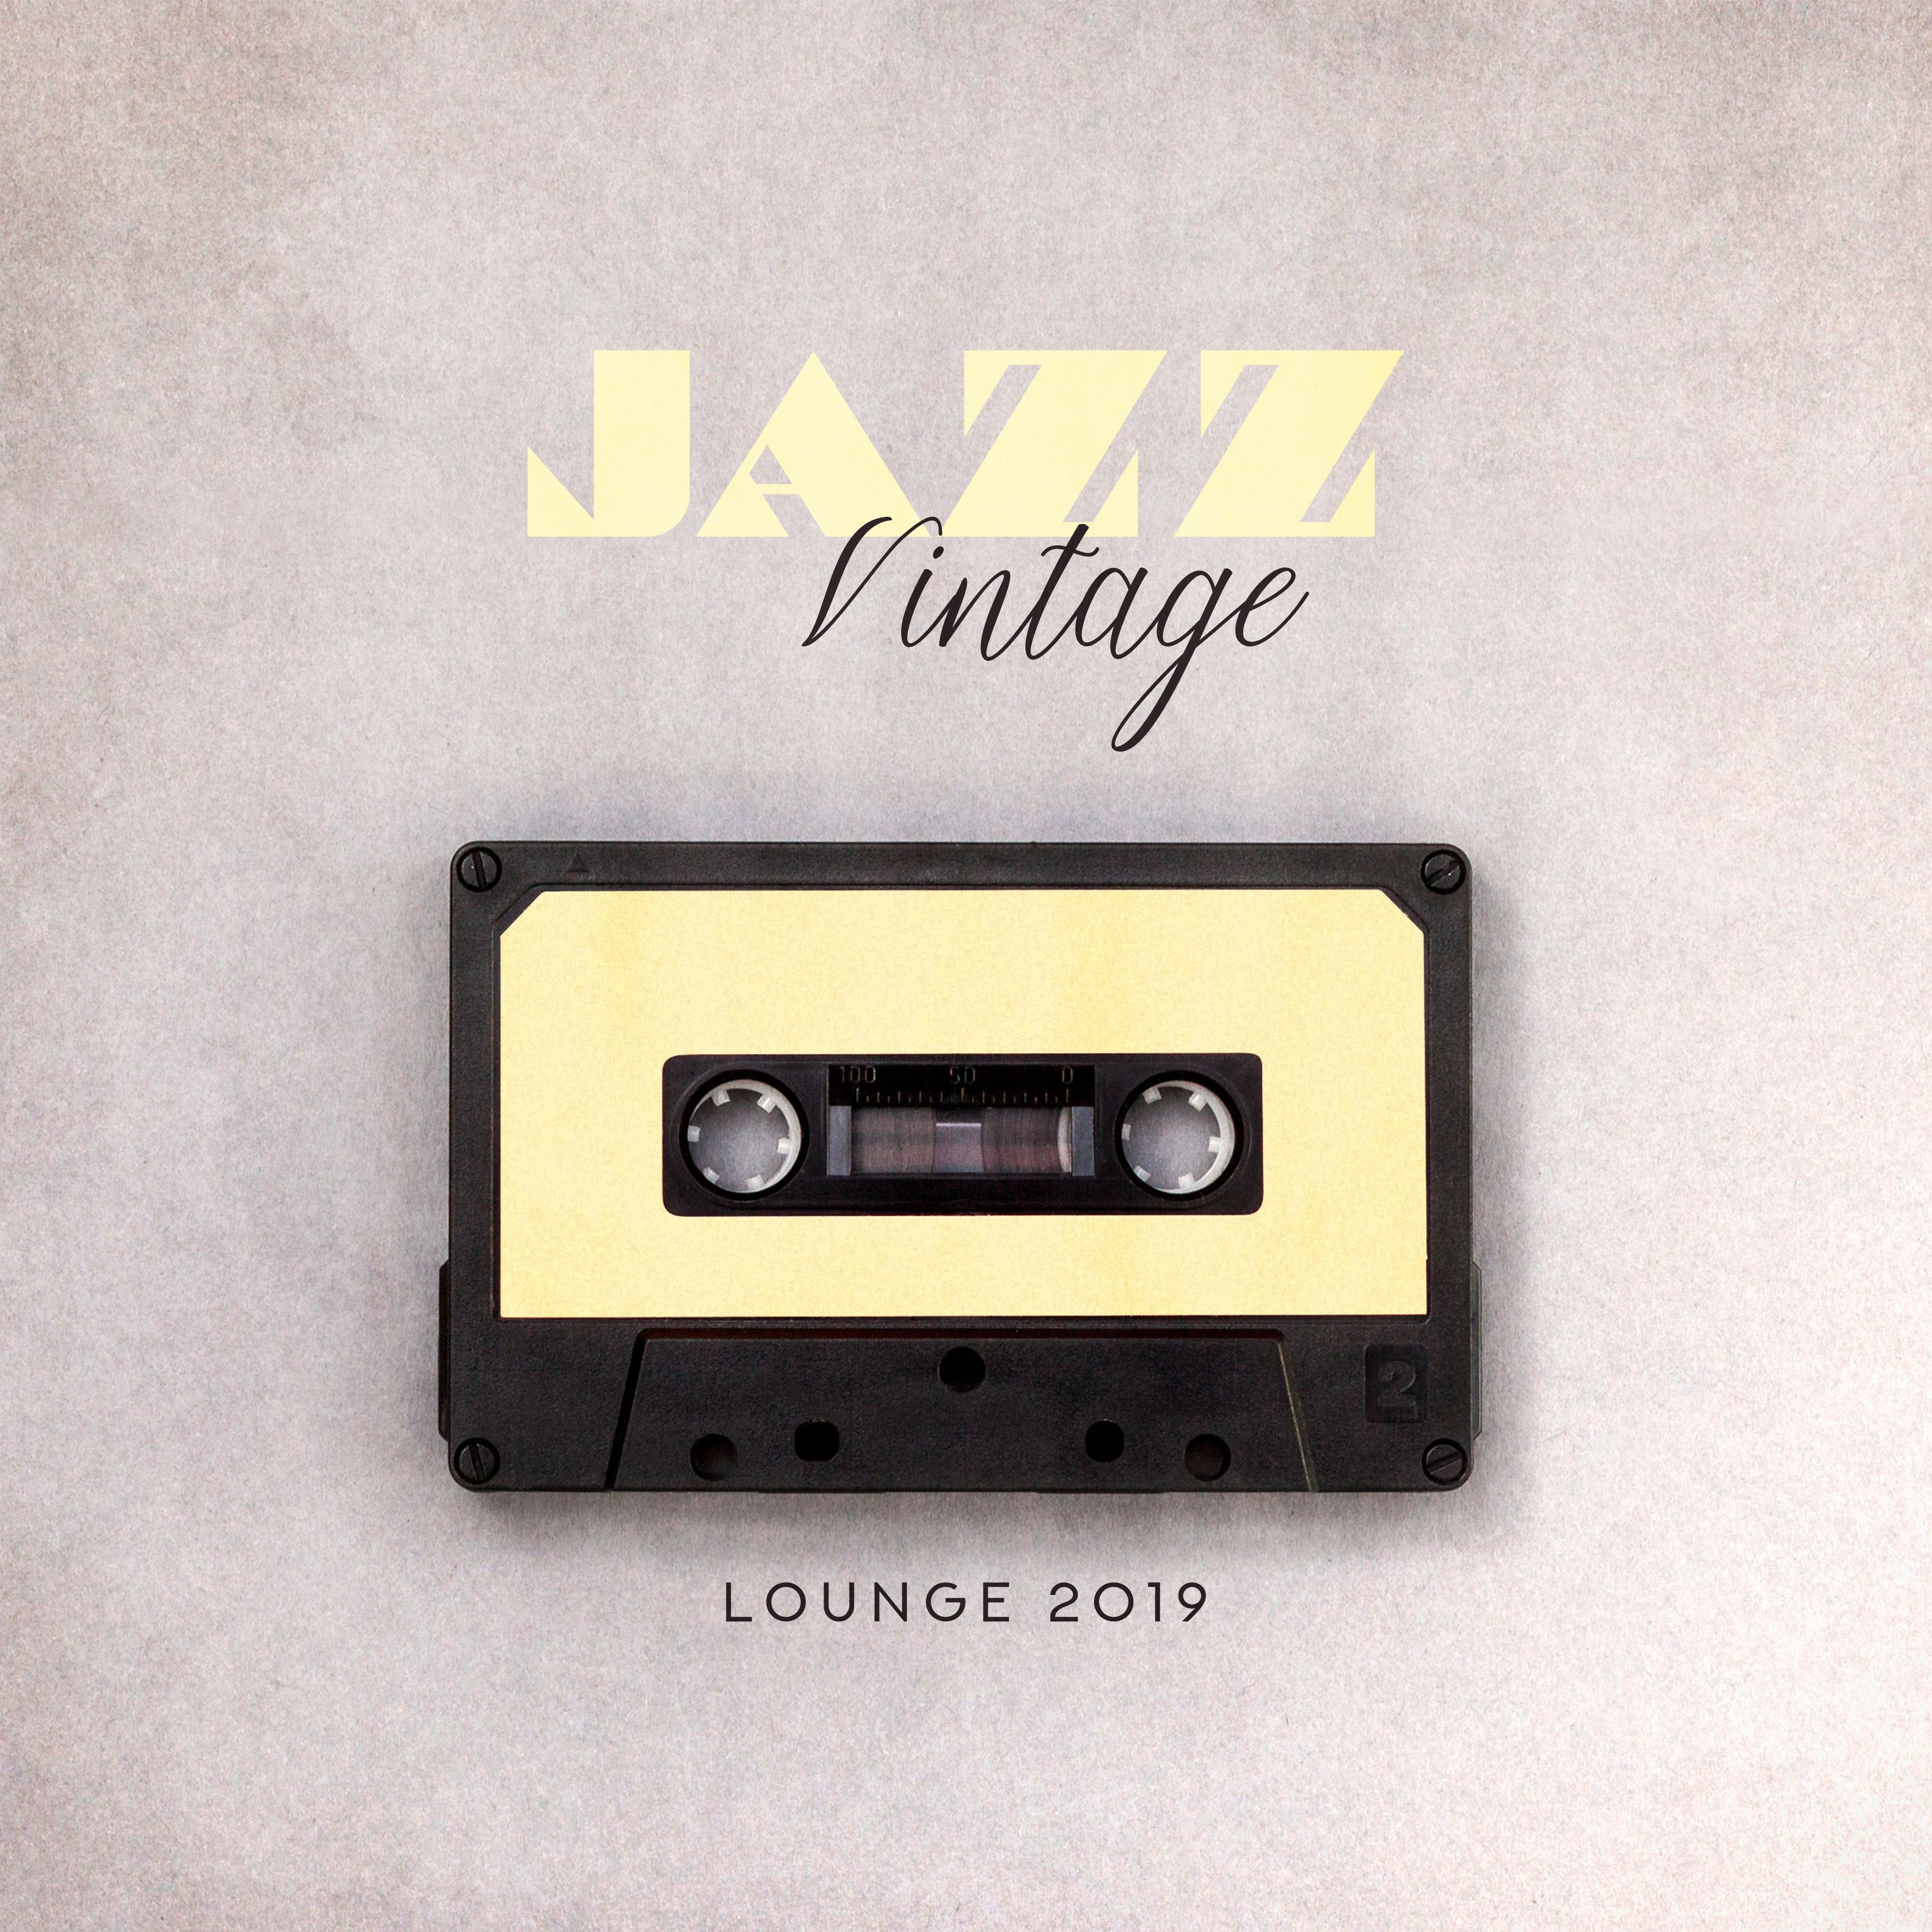 Jazz Vintage Lounge 2019